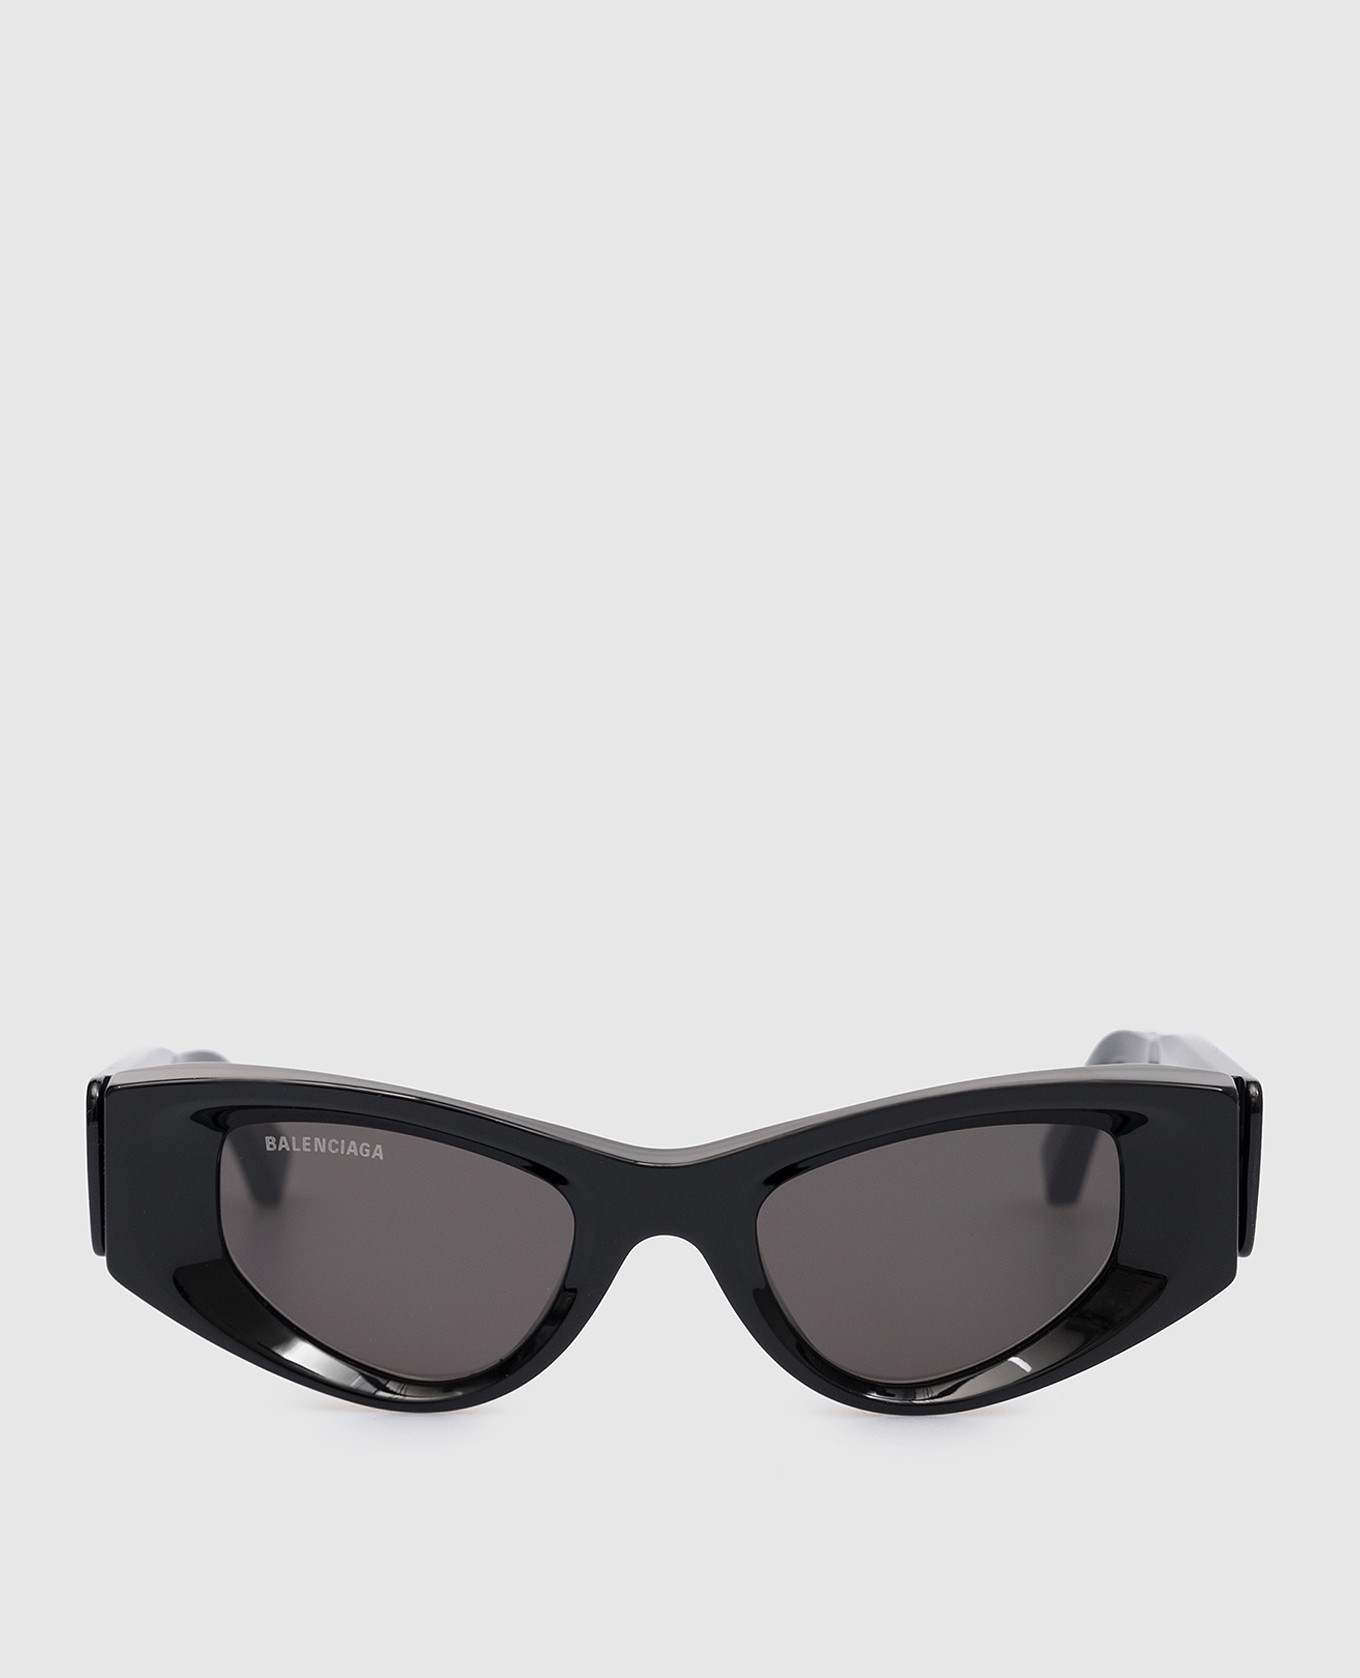 SWIFT black sunglasses